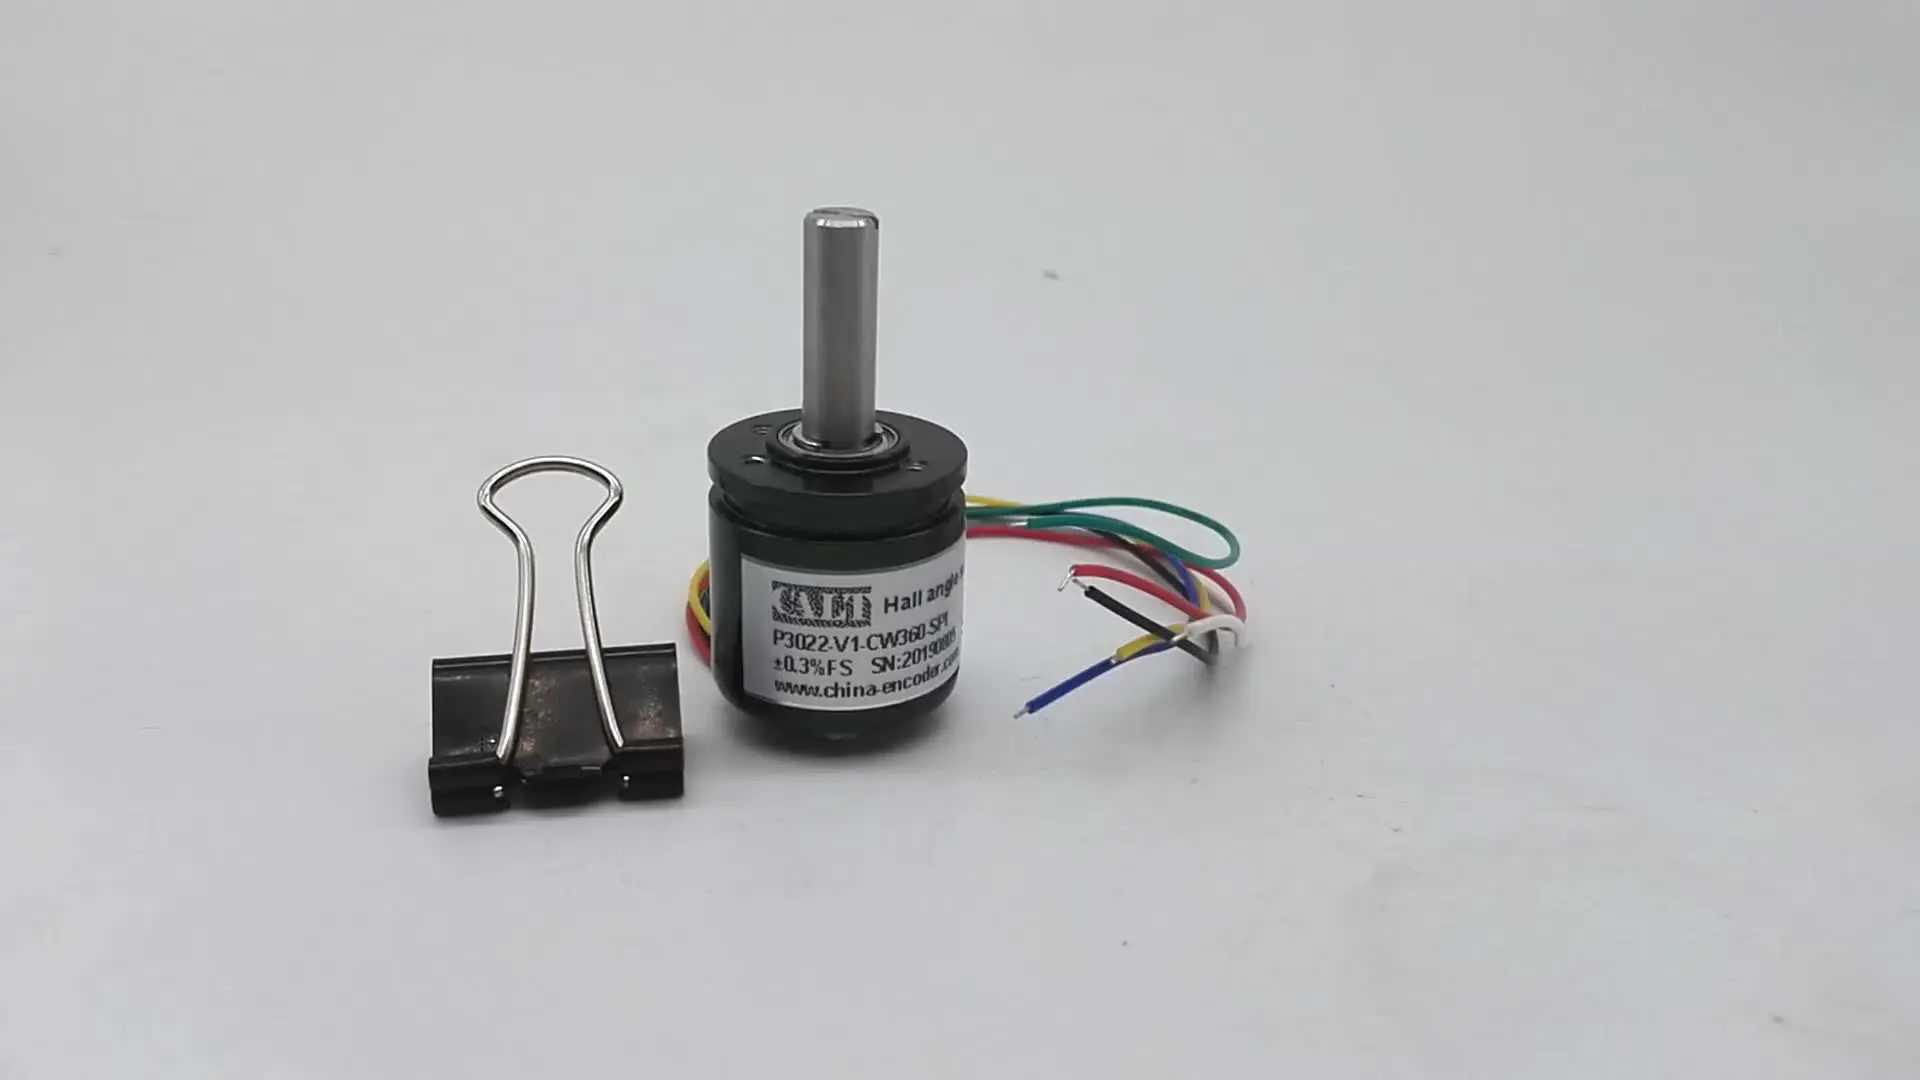 Angle Sensor Hall Effect Potentiometer DC 5V Analog Non Contact Instrument 